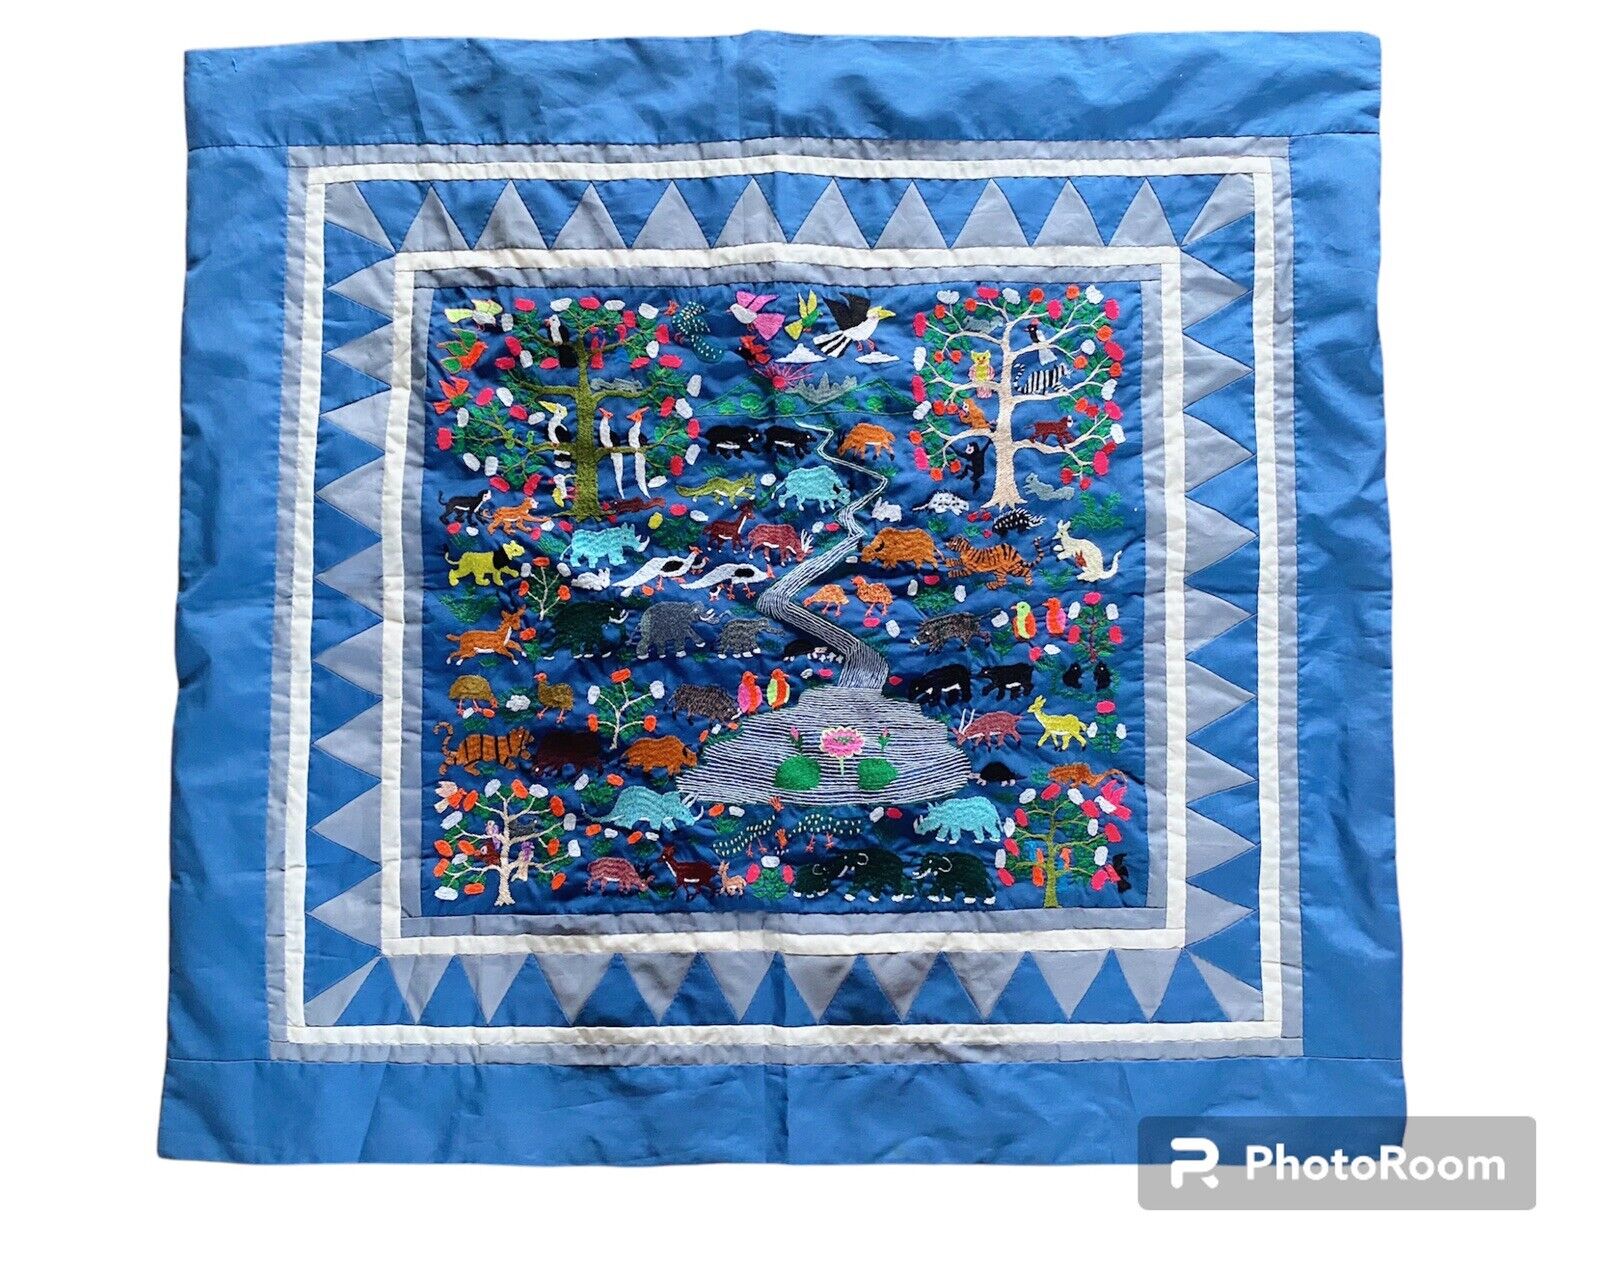 Hmong Lao Embroidery Story Cloth Fabric Needlework Hand-Stitch Folk Art Vintage